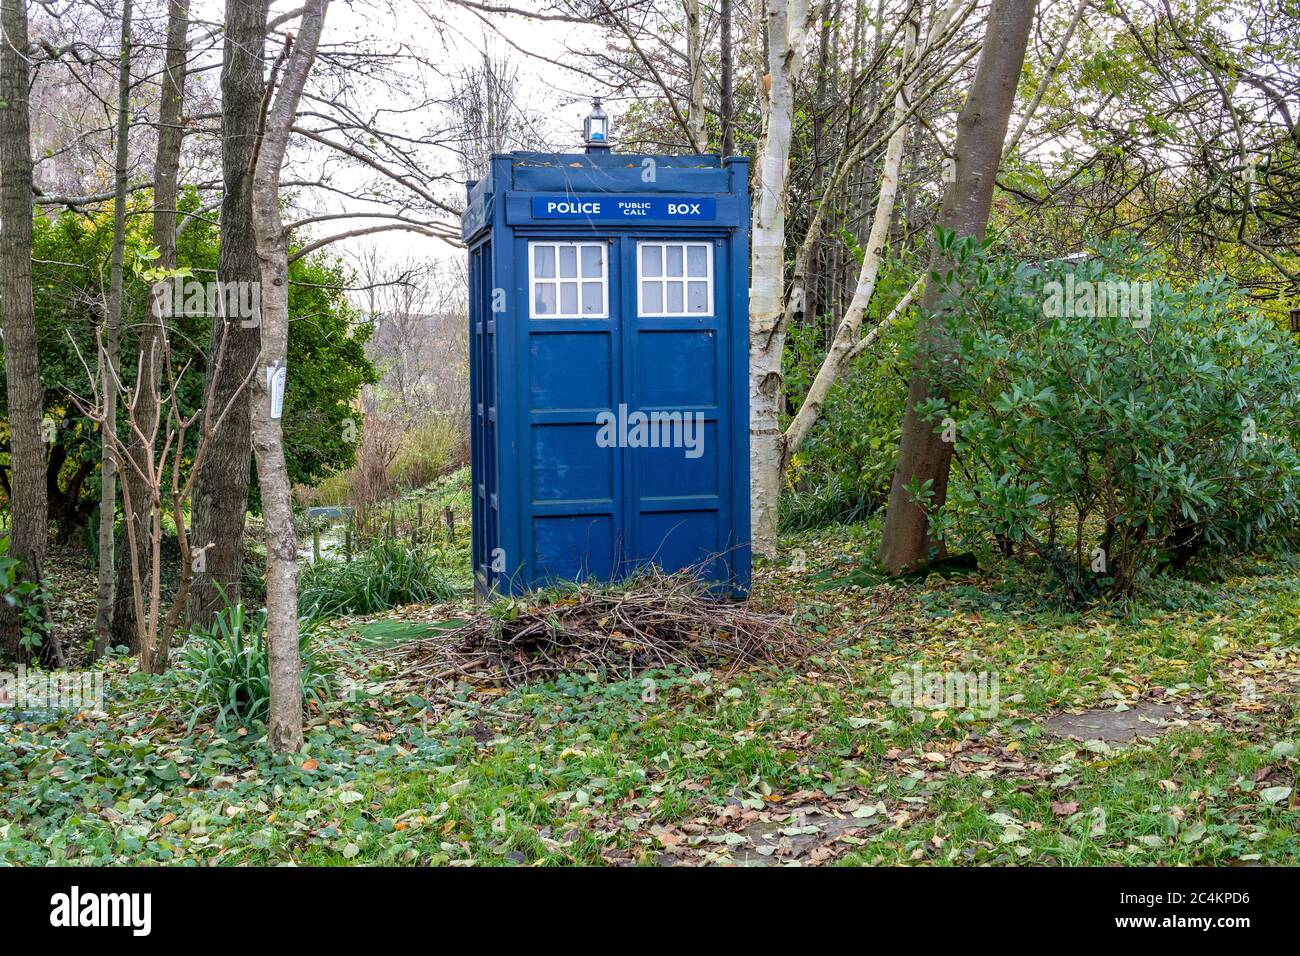 Doctor Who's tardis police box Stock Photo